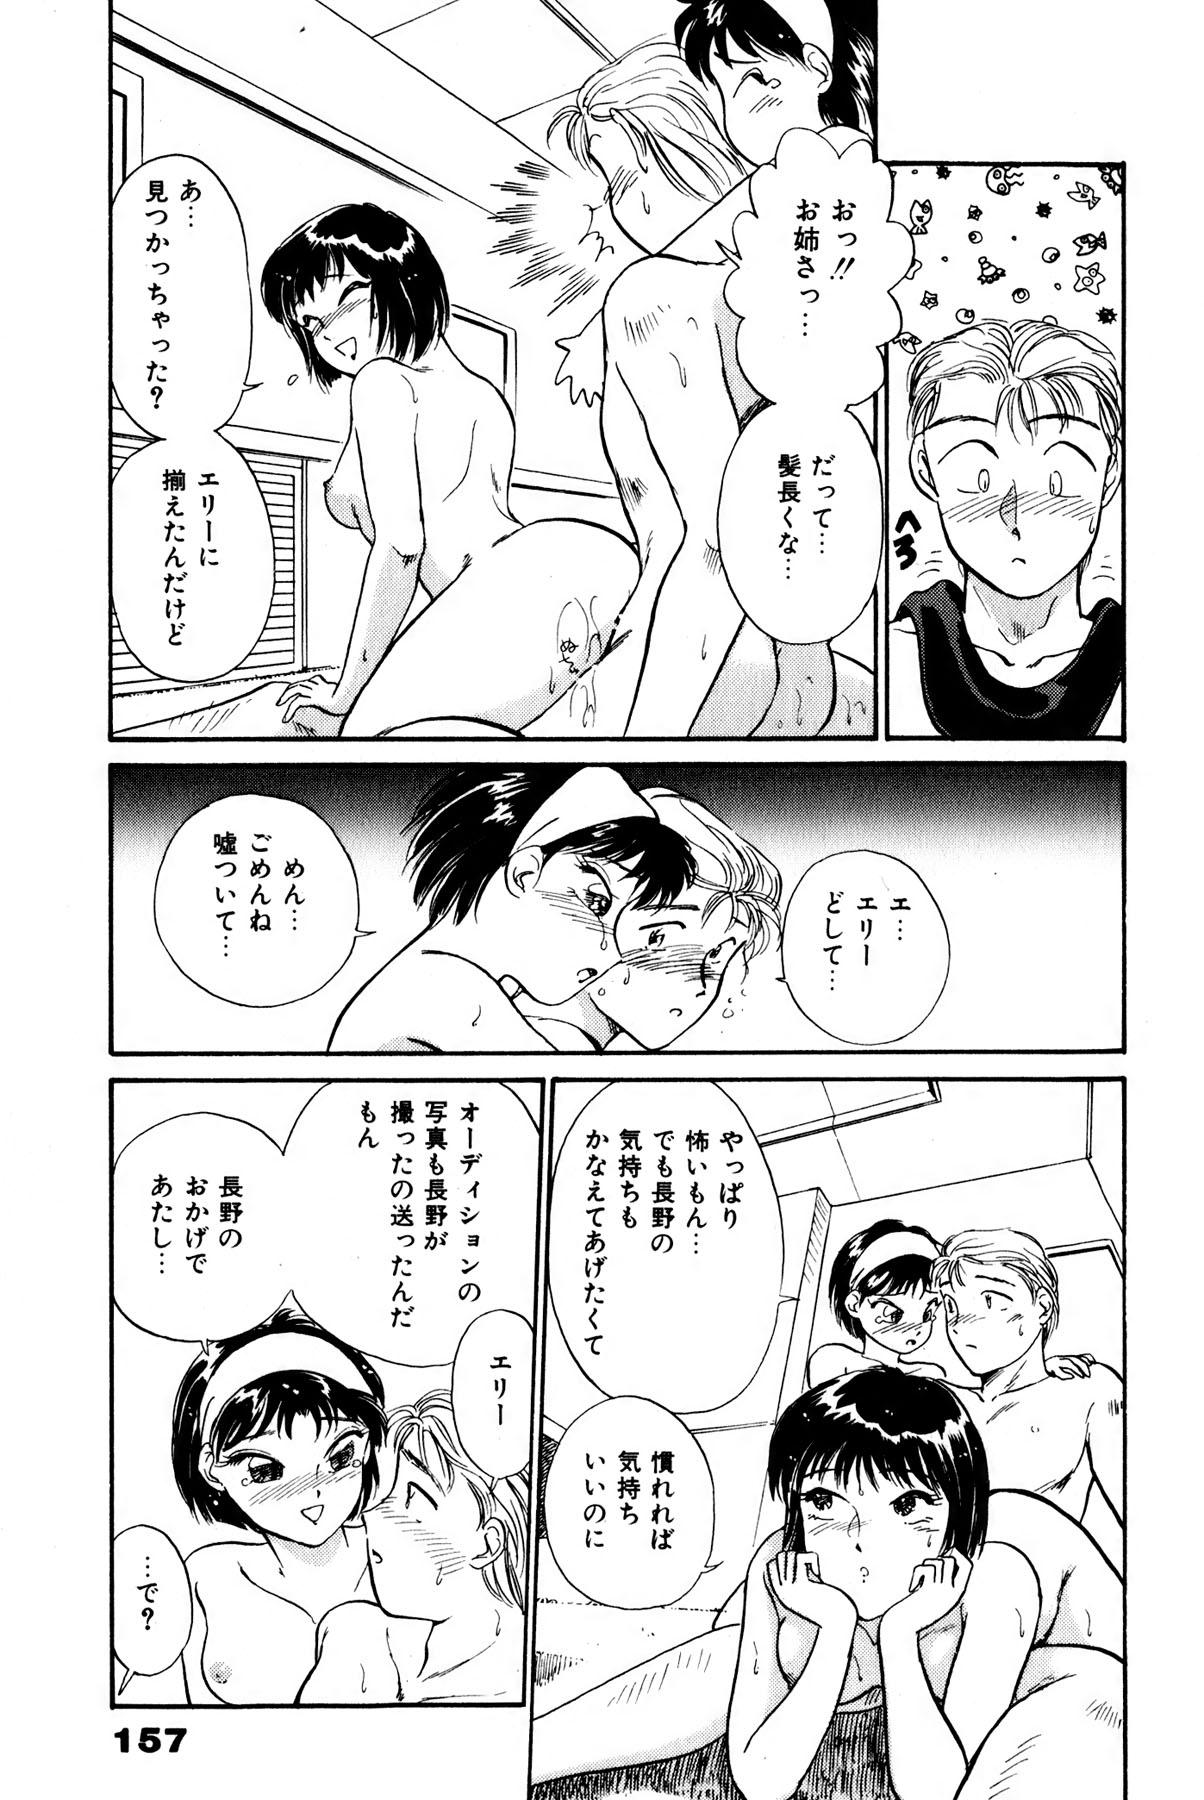 Otakara Comic 157